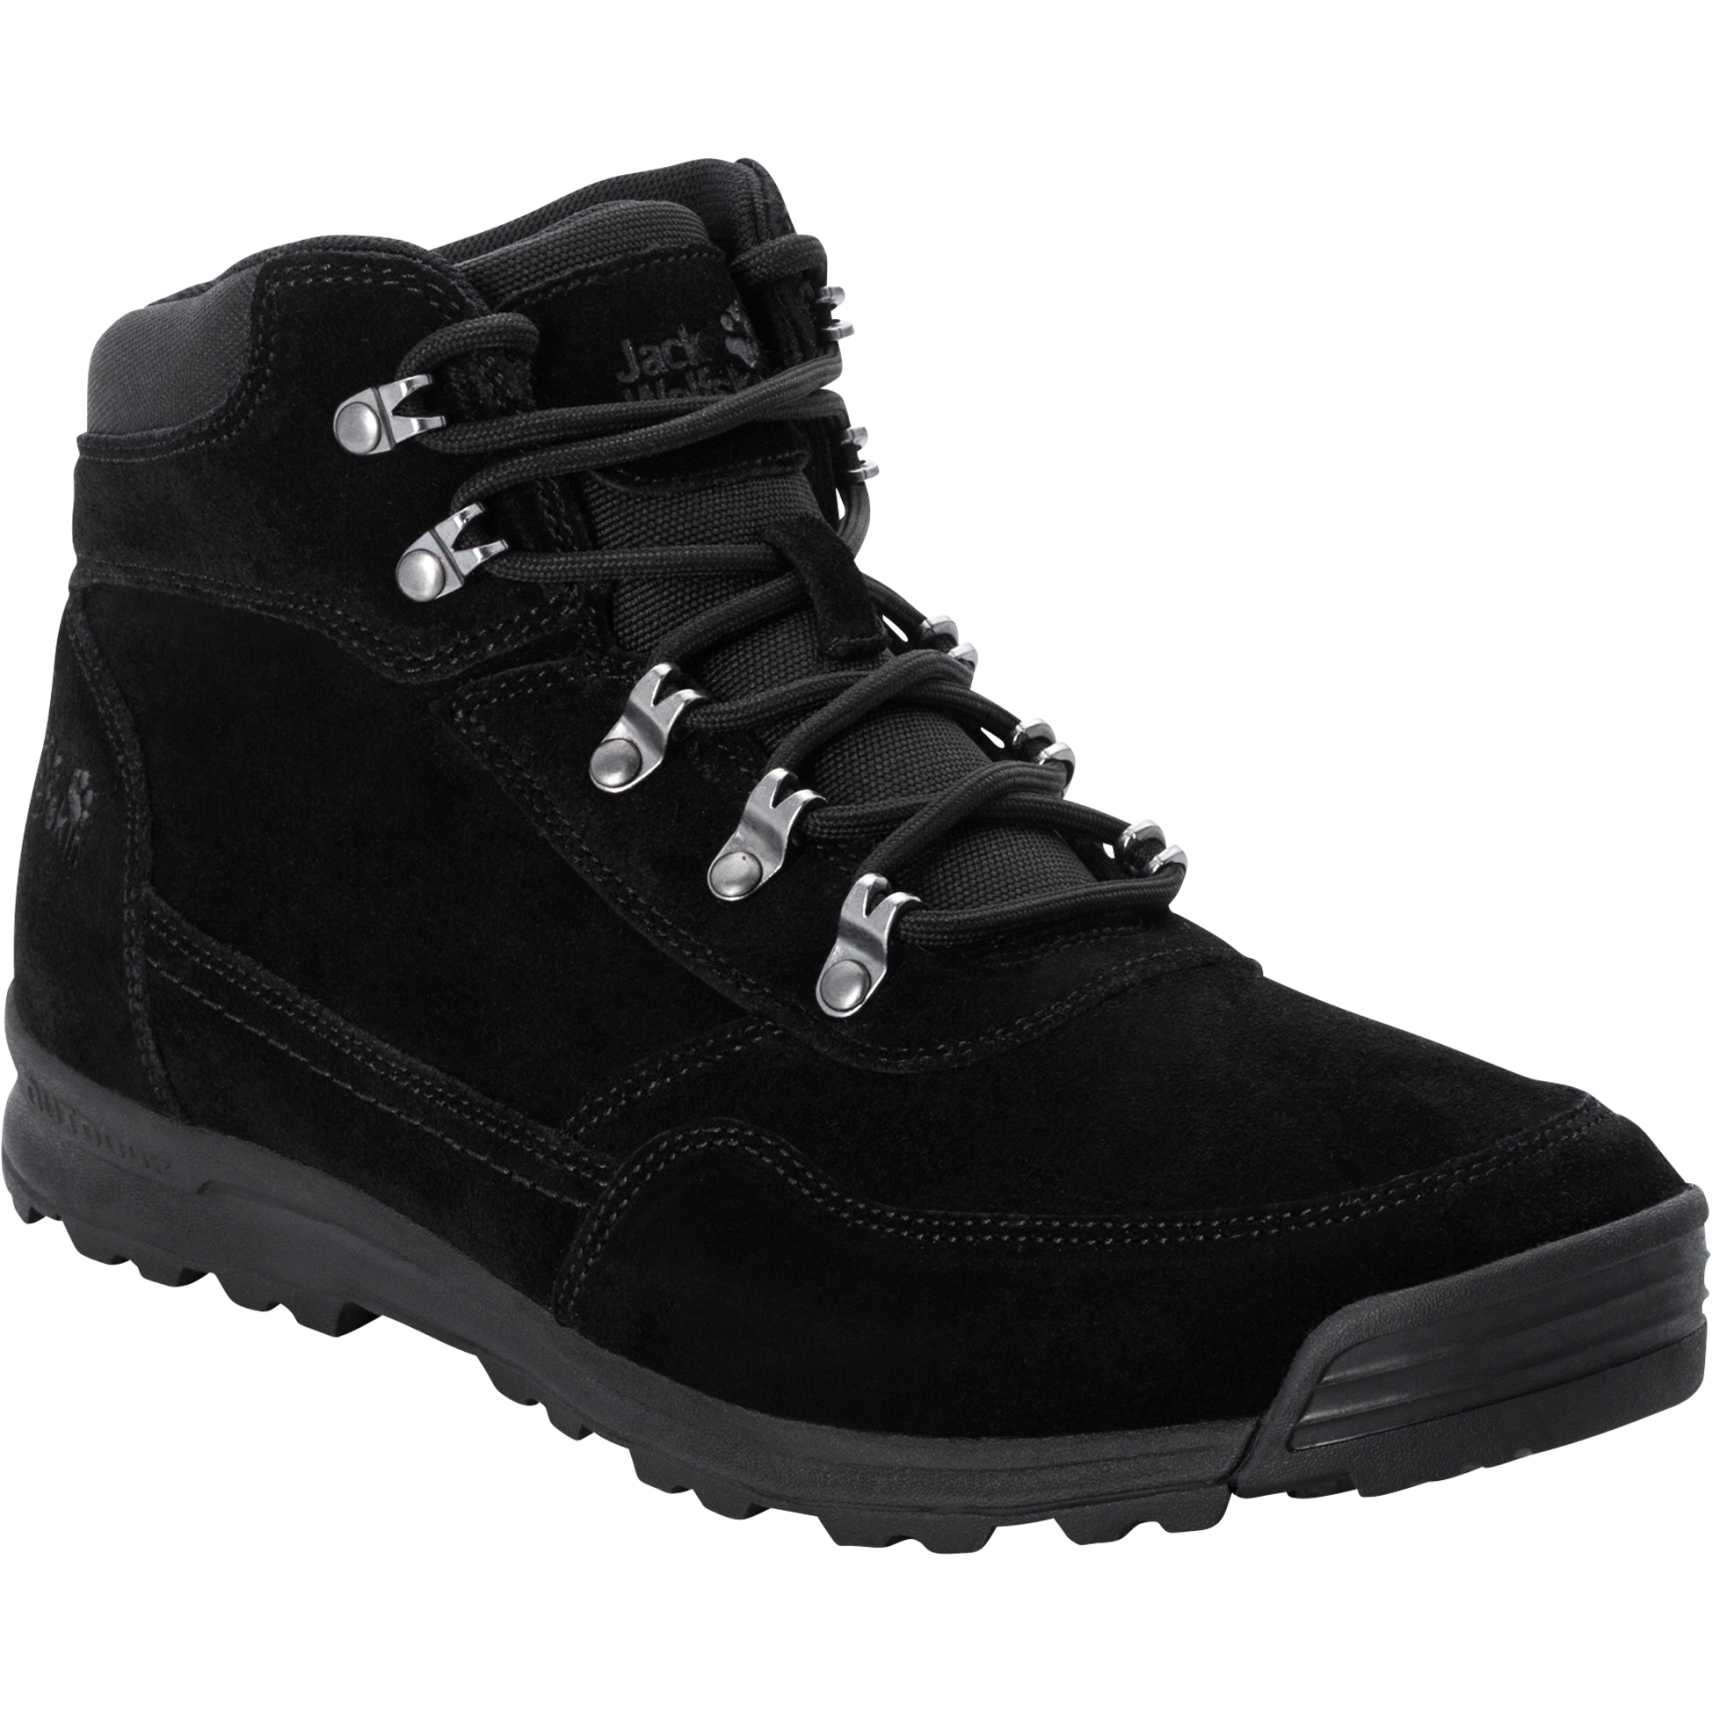 Image of Jack Wolfskin Hikestar Mid Leather Boots - black / black